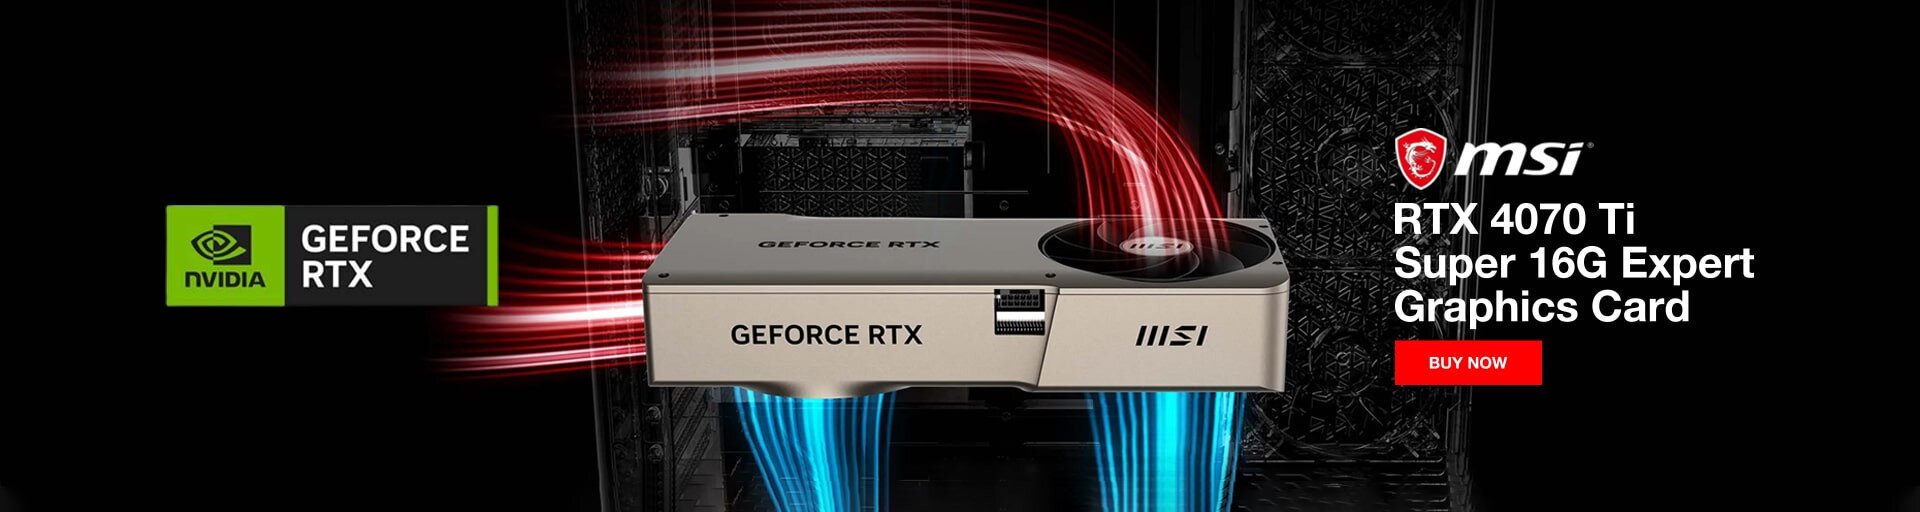 MSI GeForce RTX 4070 Ti Super 16G Expert Graphics Card